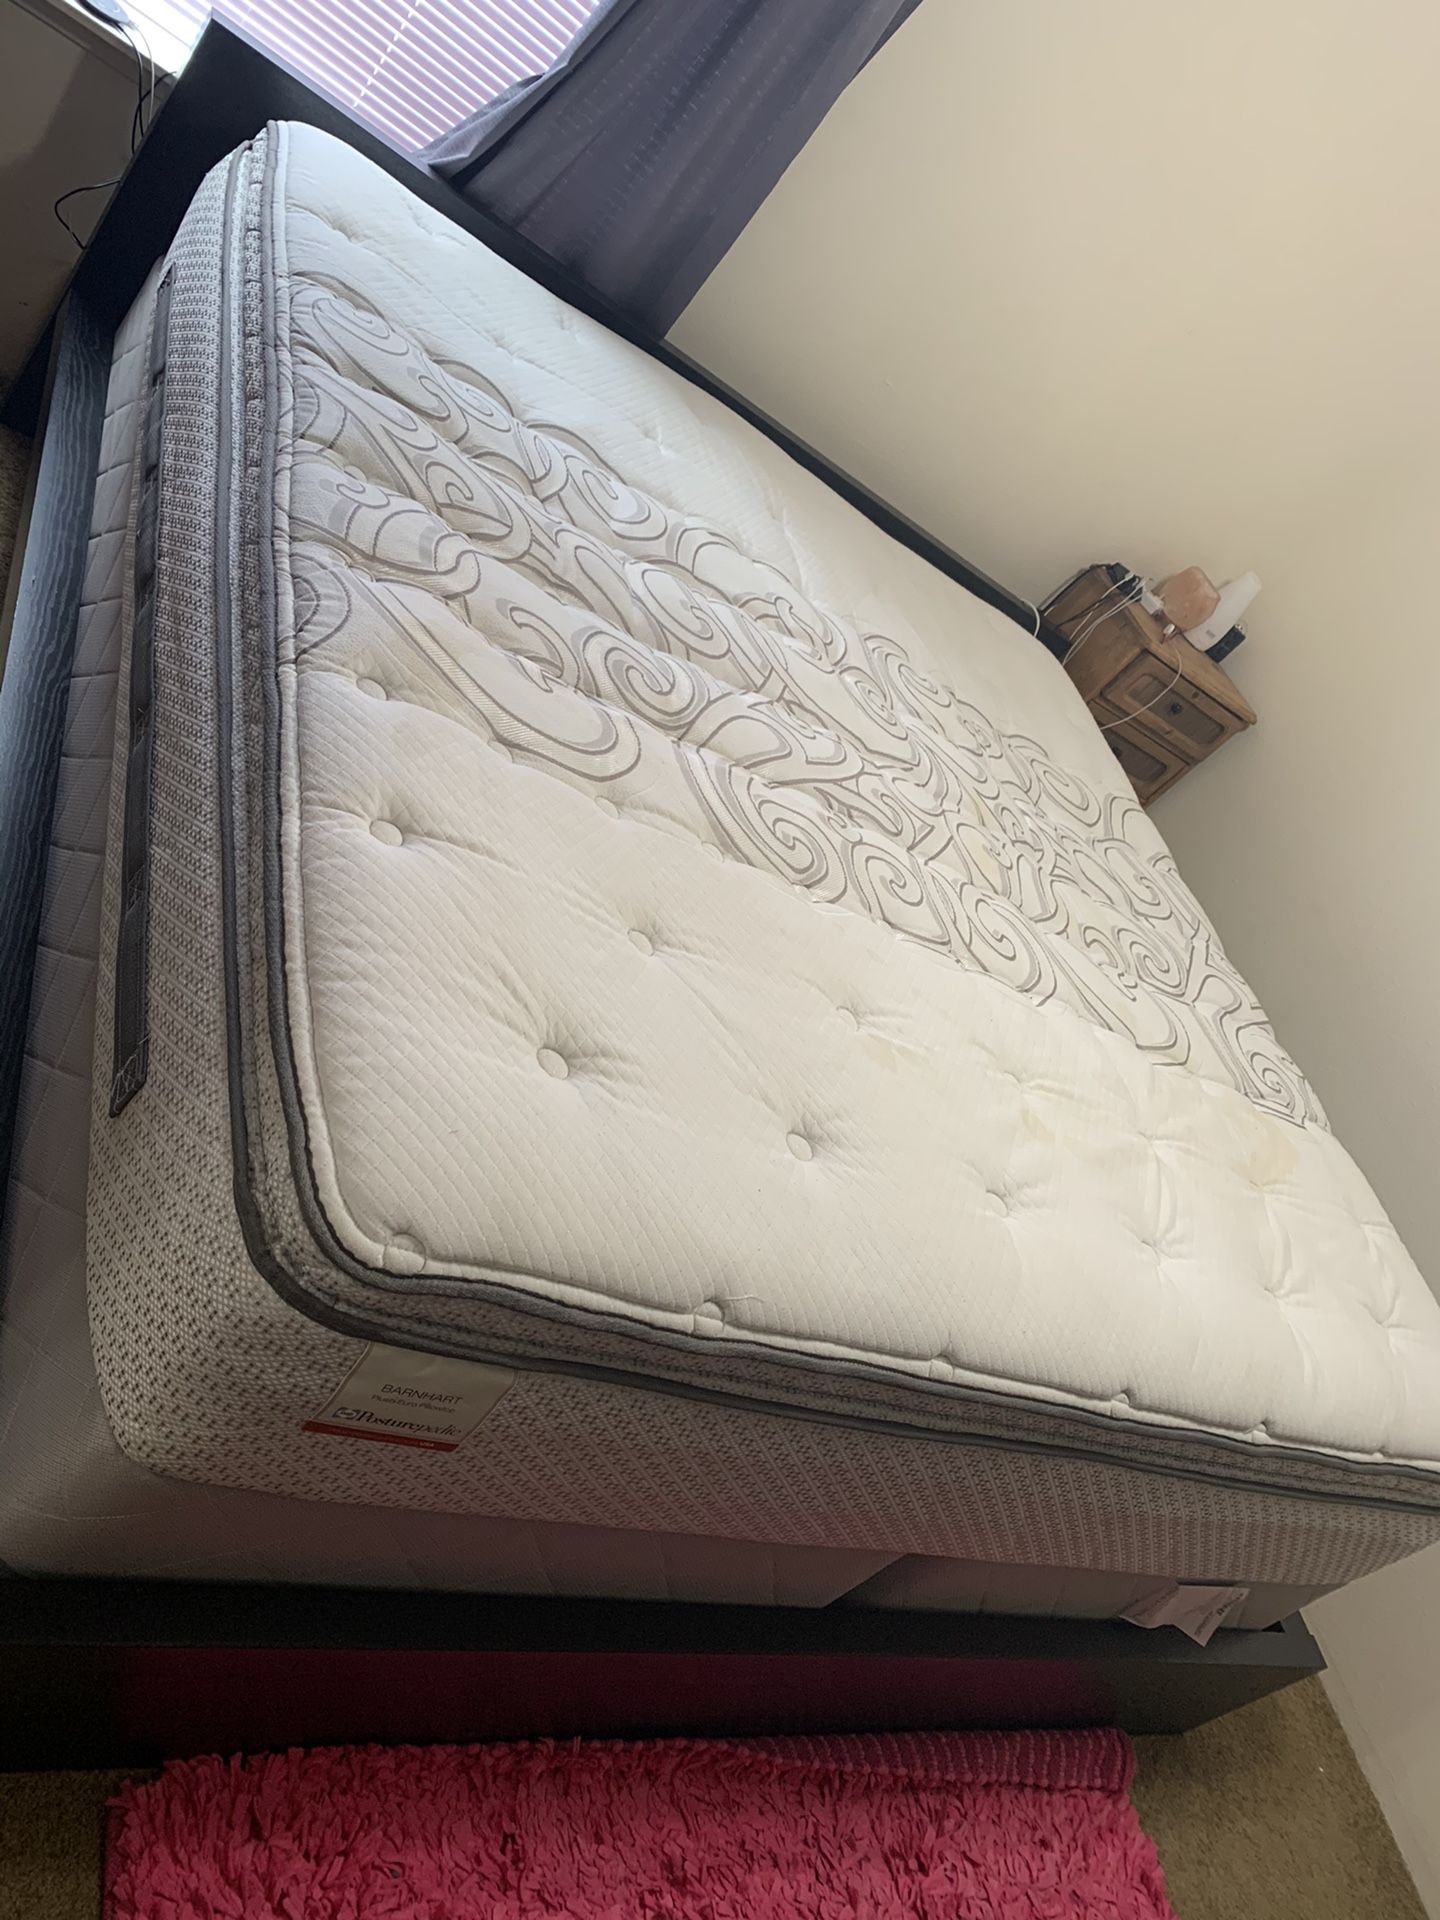 King size mattress and box spring (no frame)